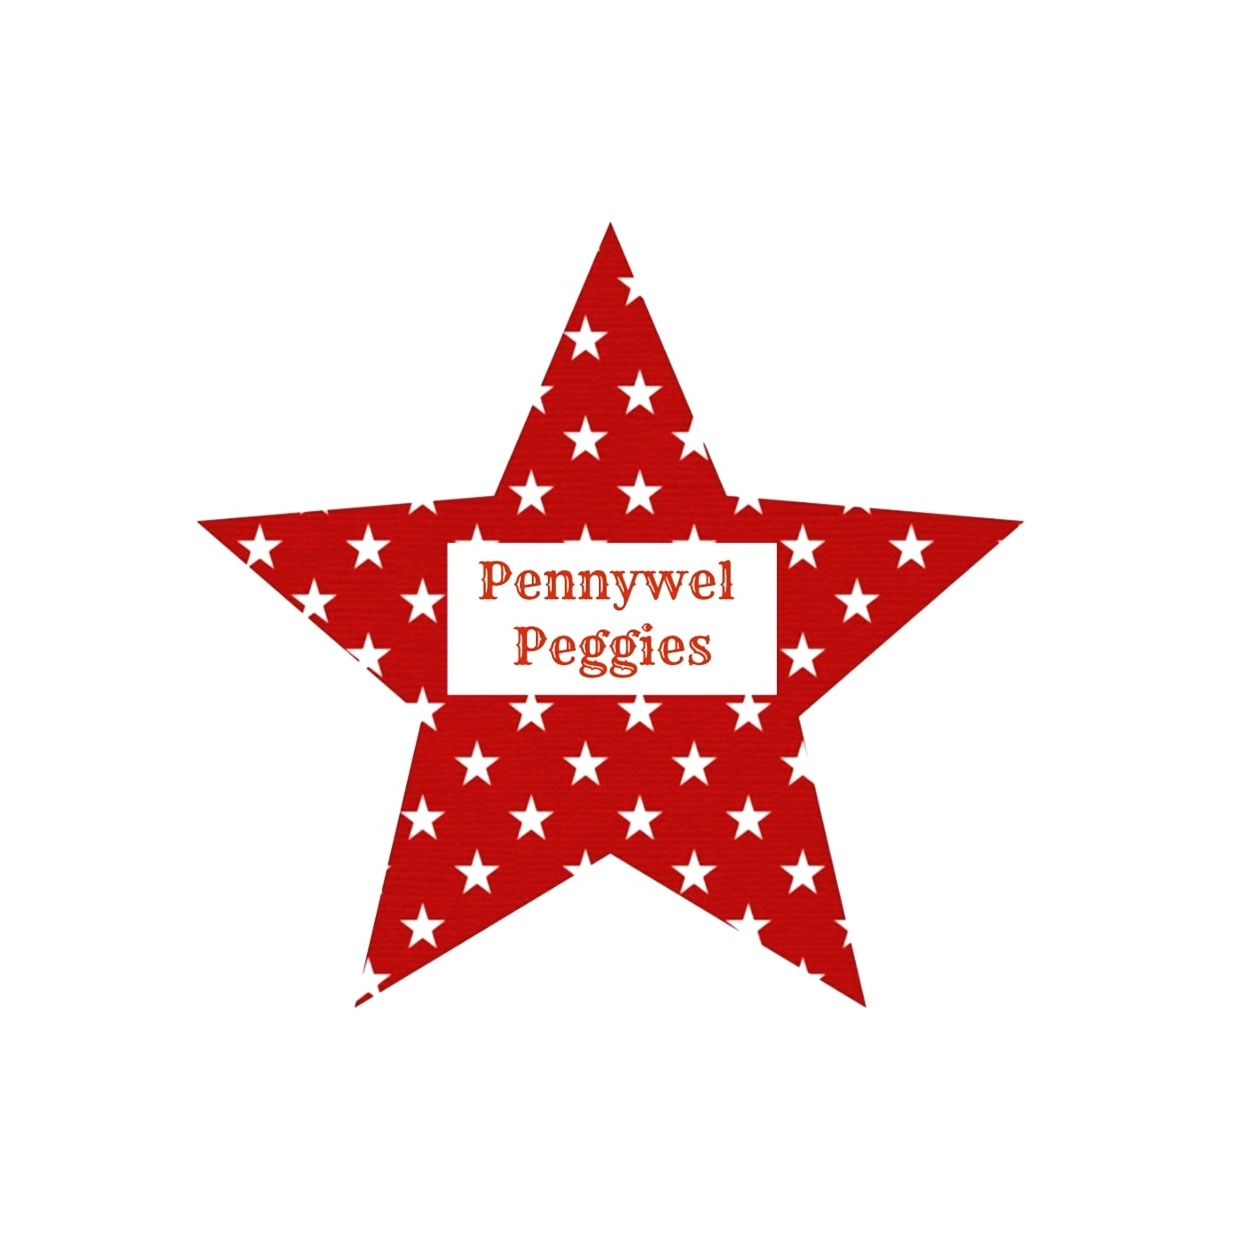 Pennywel Peggies